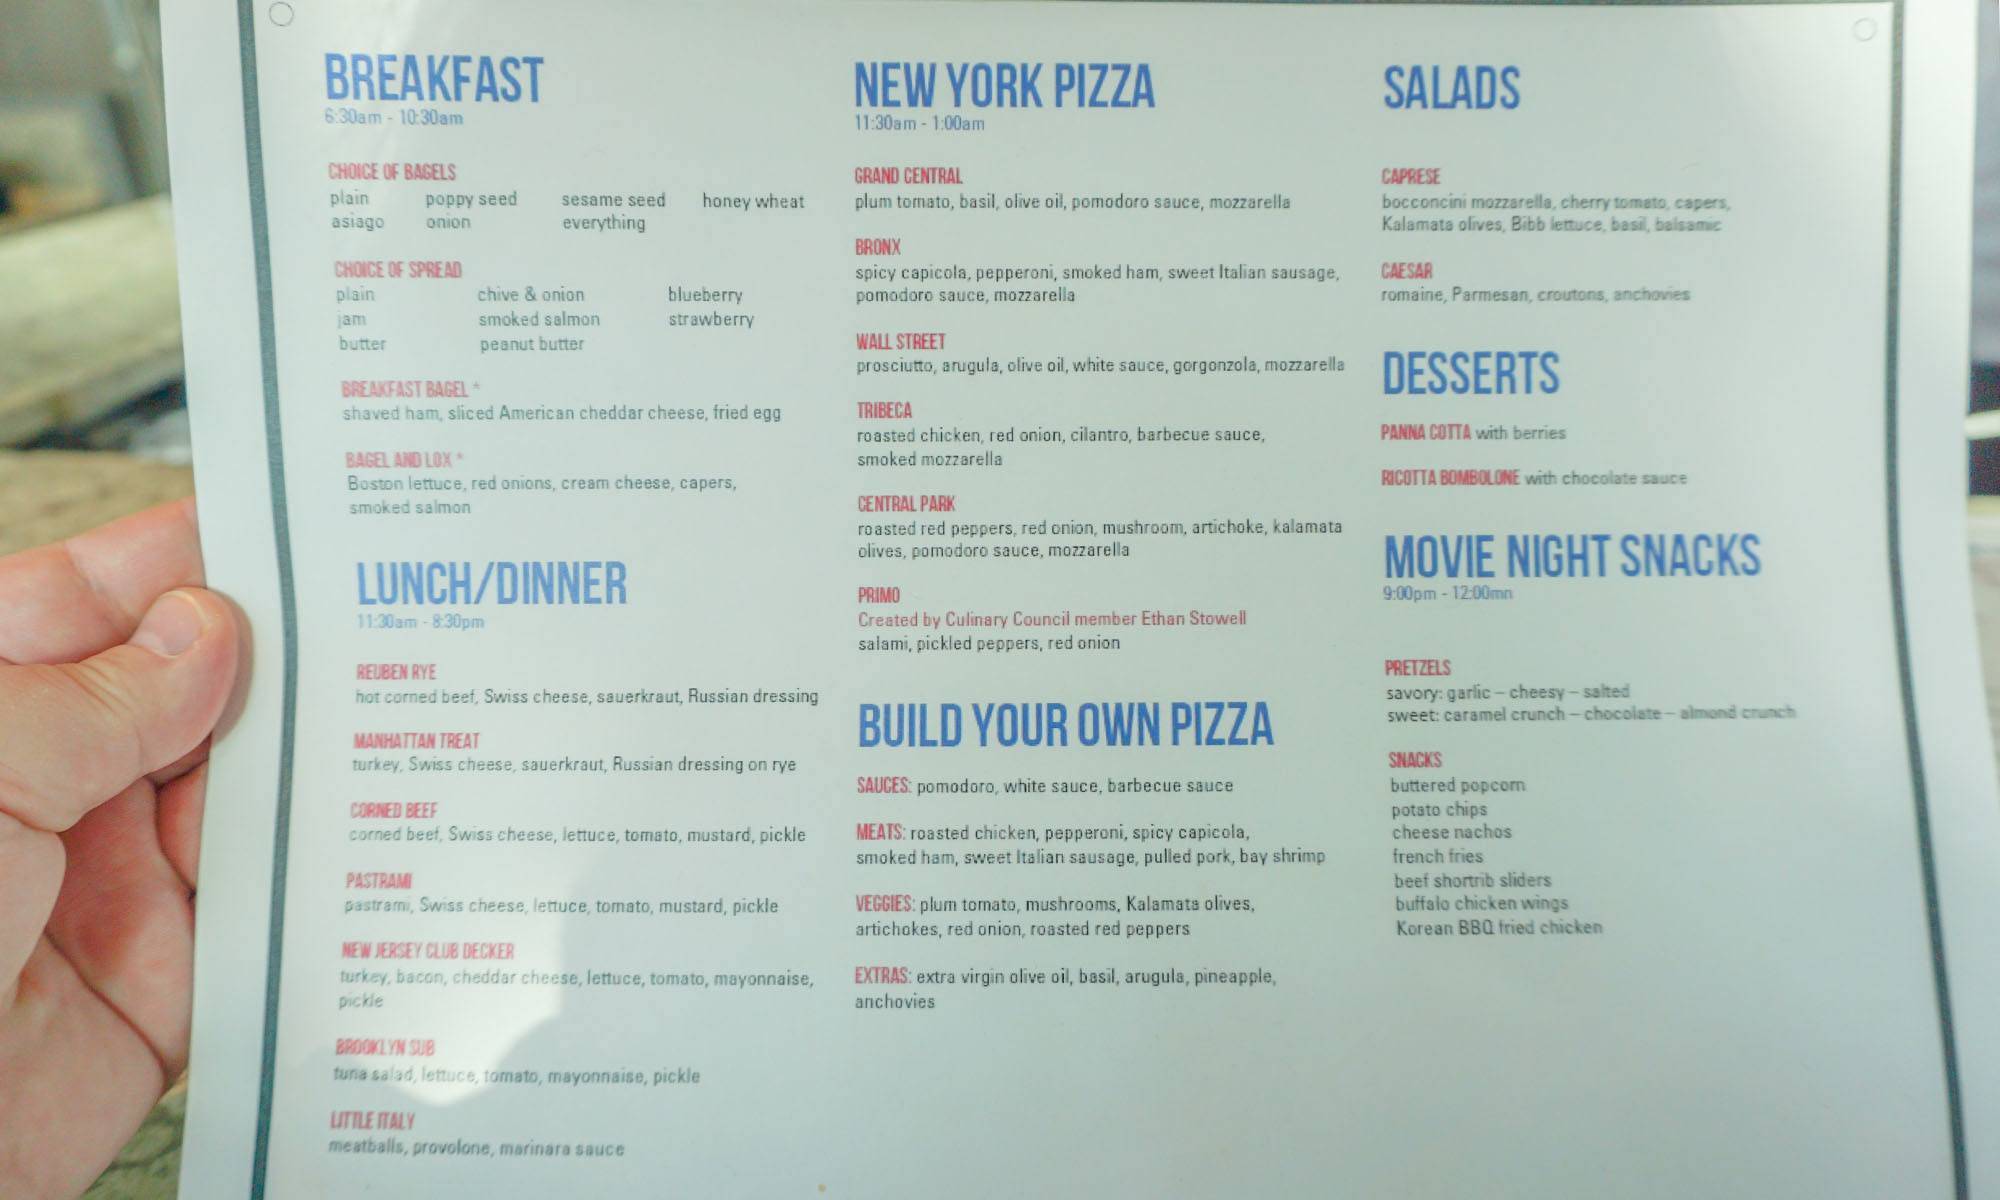 Nieuw Statendam New York Deli Pizza